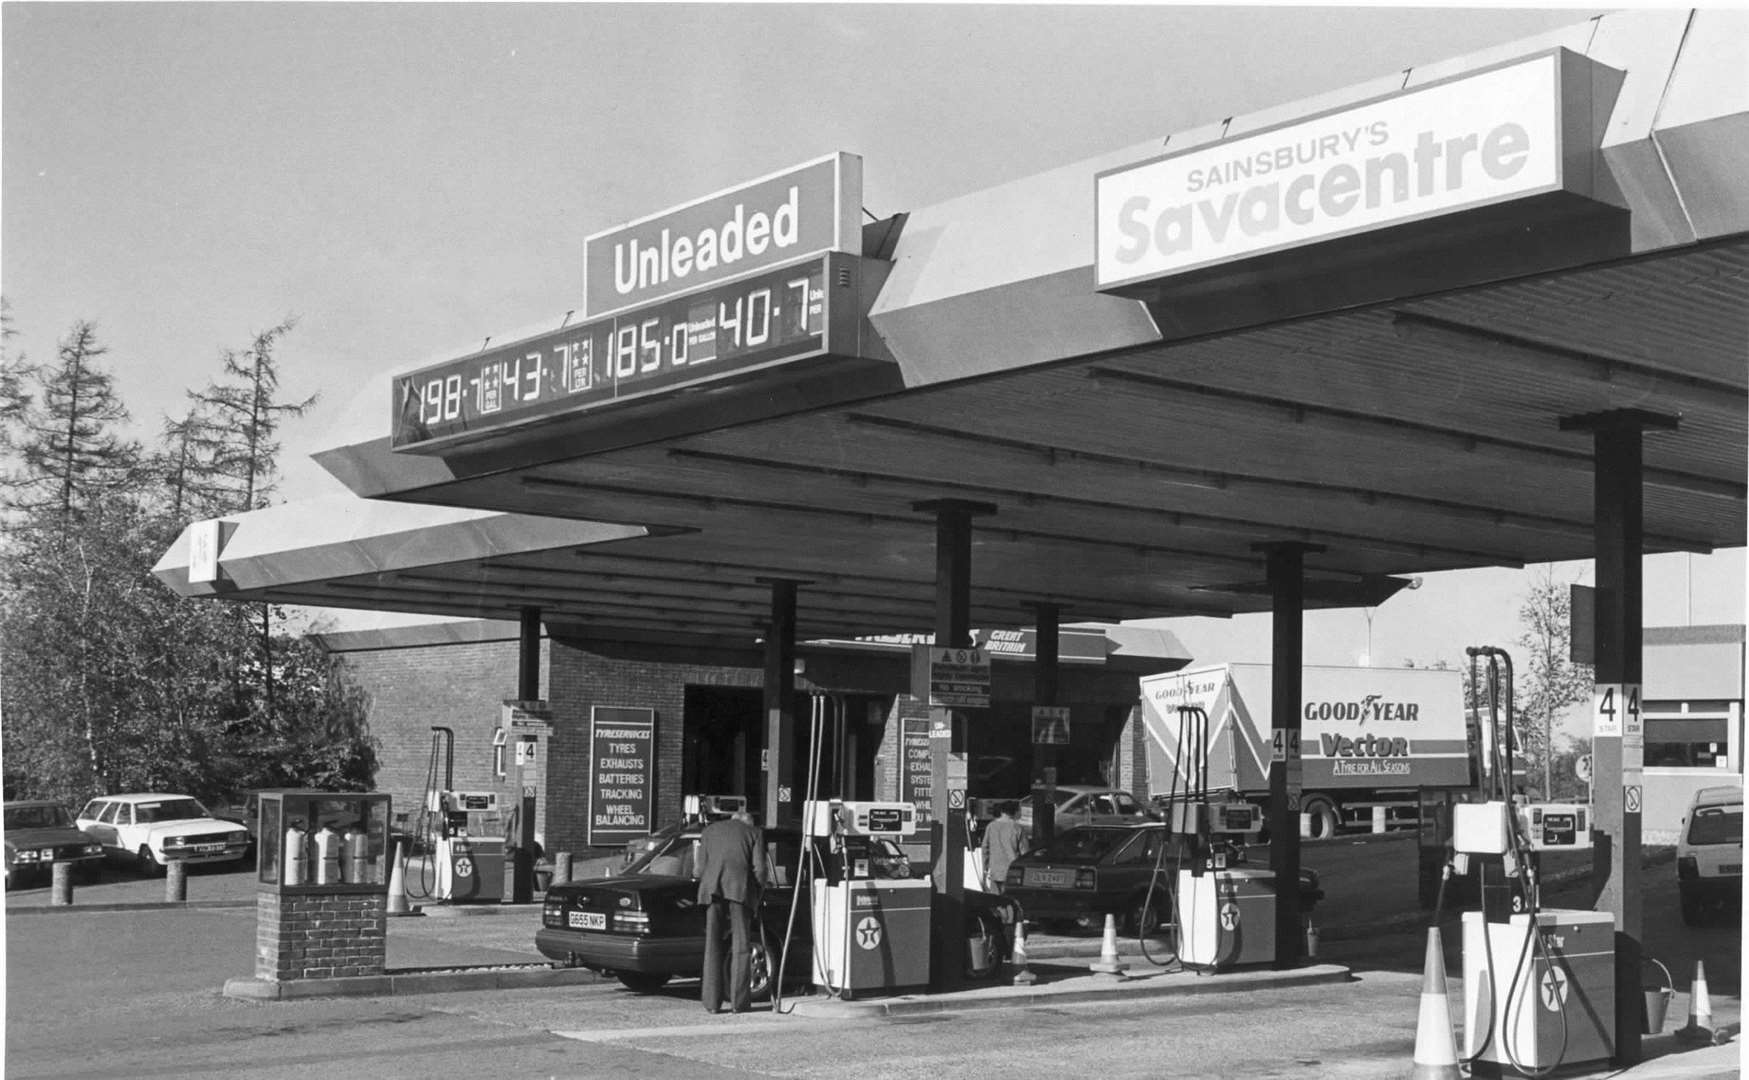 Sainsbury Petrol Station, Savacentre, Hempstead Valley, Gillingham. file pic dated 5th November, 1990